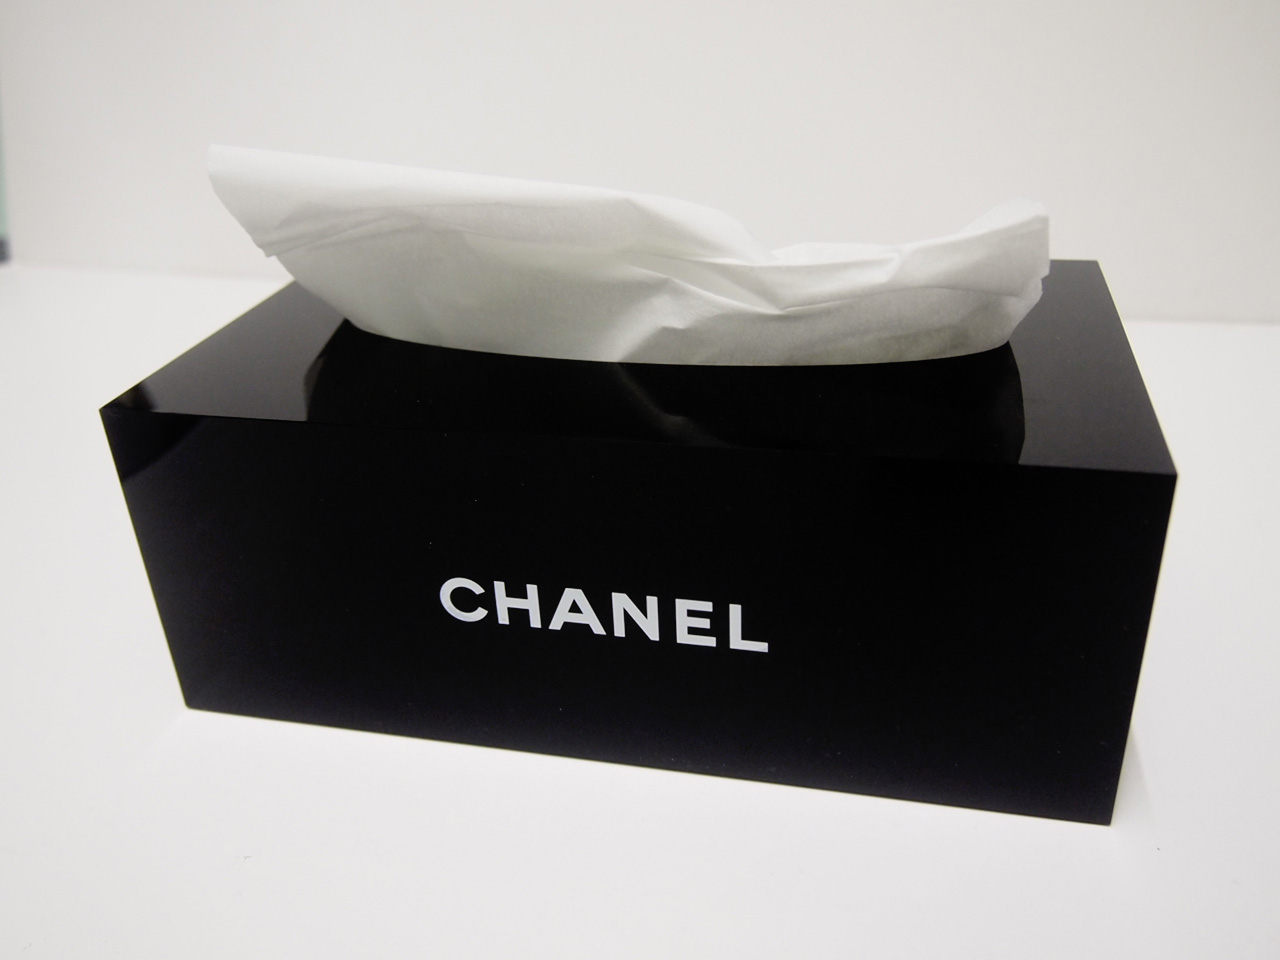 Chanel VIP Classic gift item Black White Tissue Case/Box/Holder